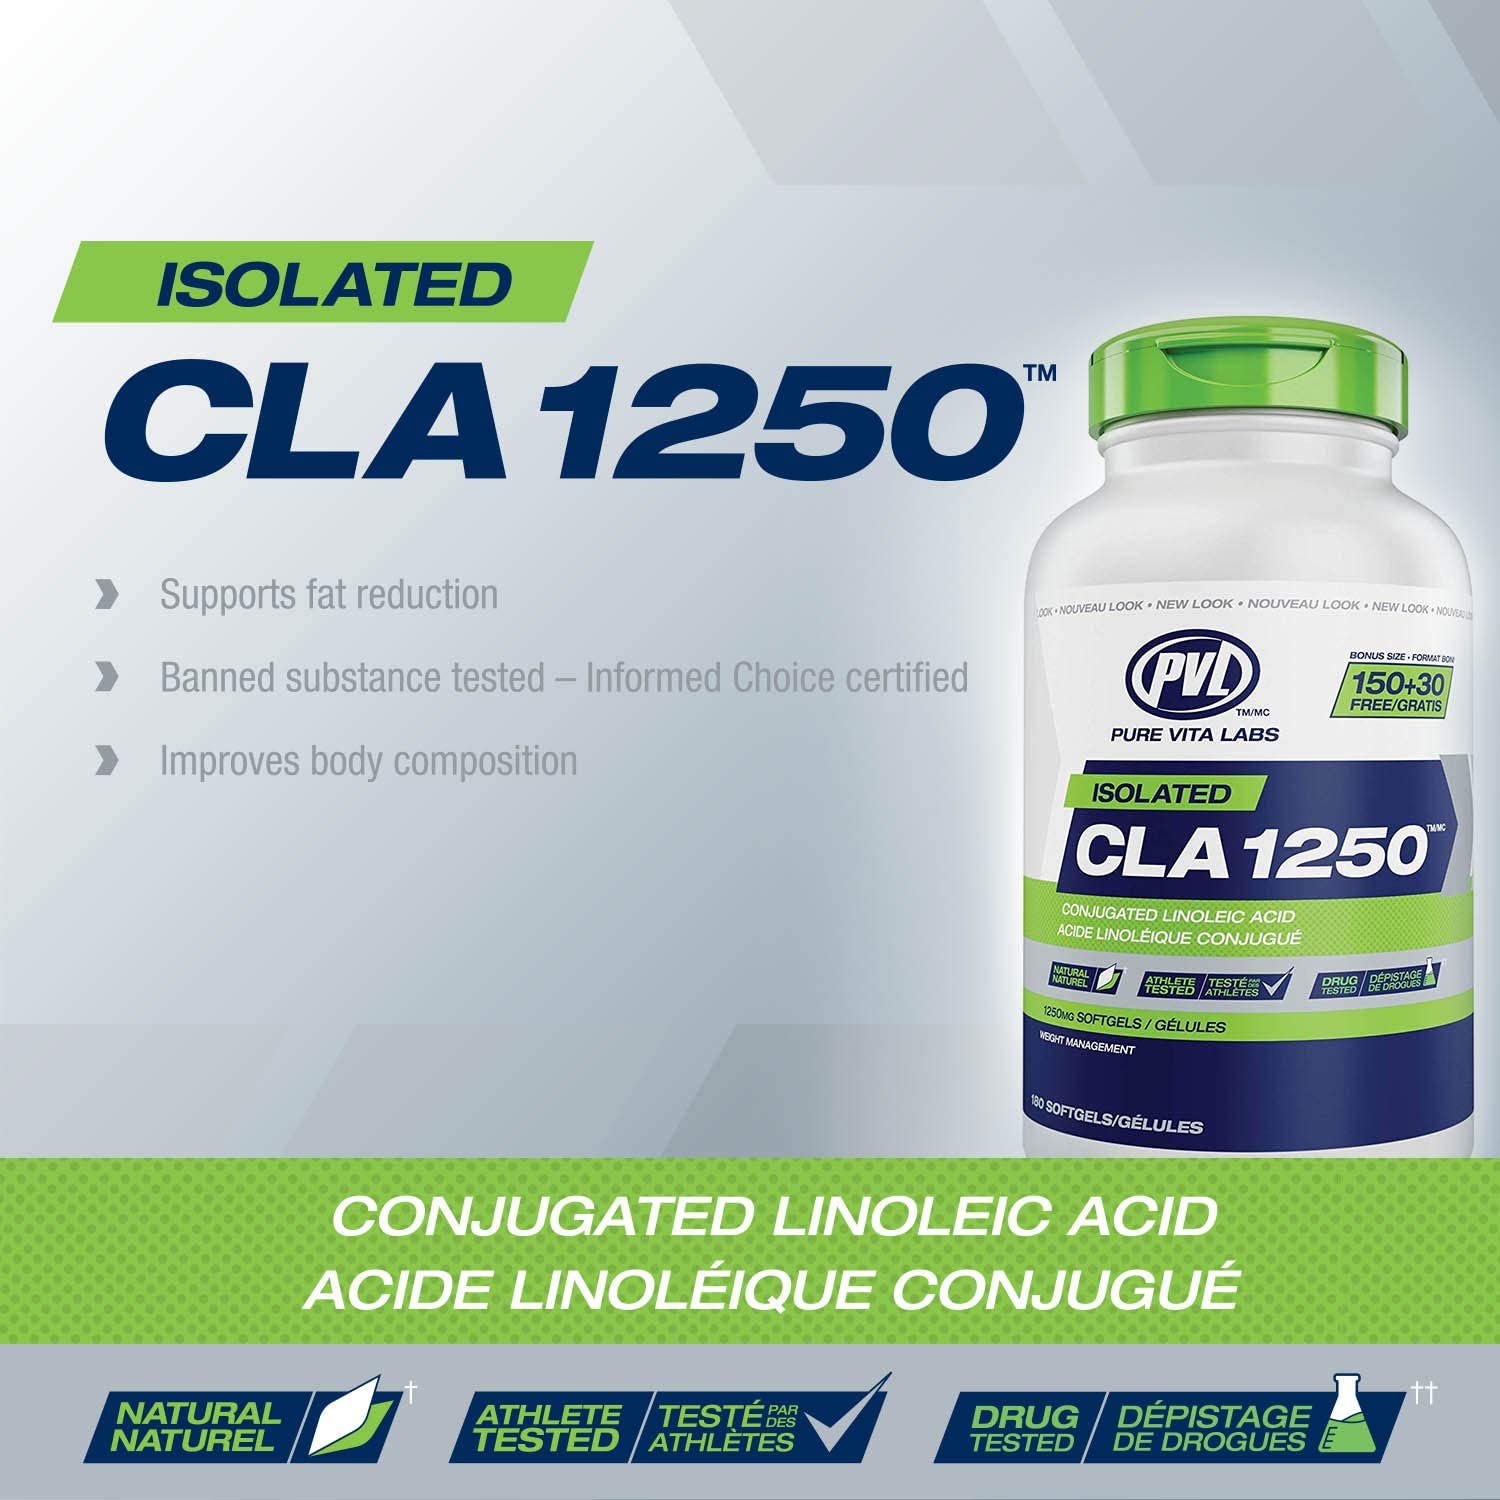 Pure Vita Labs Isolated CLA 1250™ 180 softgels